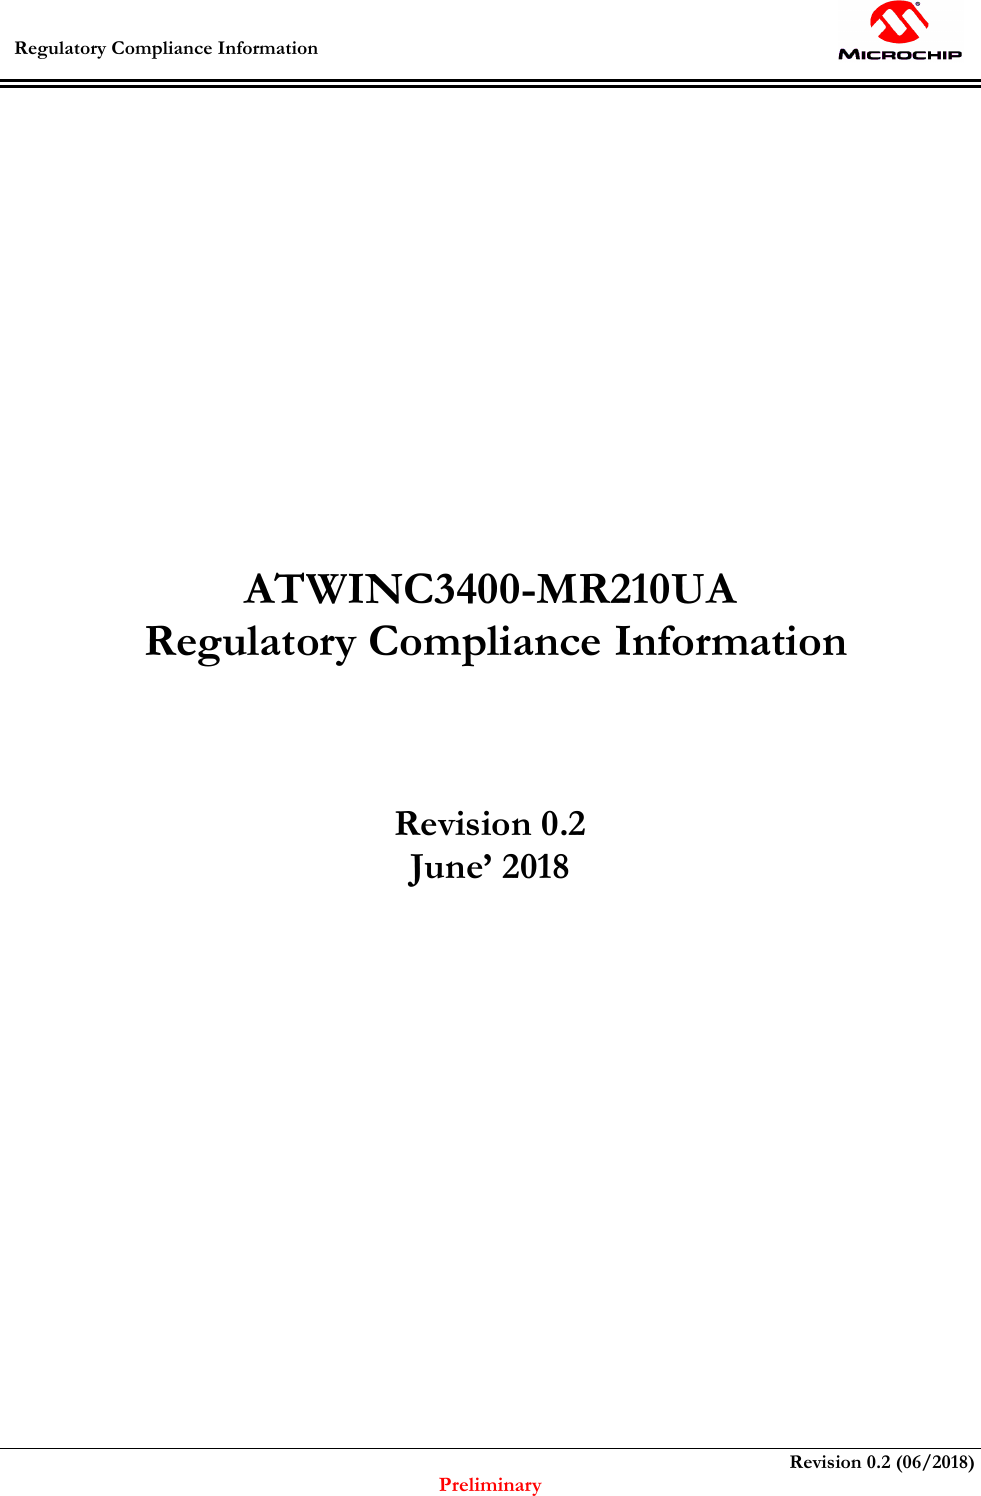  Regulatory Compliance Information                                                                         Revision 0.2 (06/2018) Preliminary      ATWINC3400-MR210UA  Regulatory Compliance Information    Revision 0.2  June’ 2018  